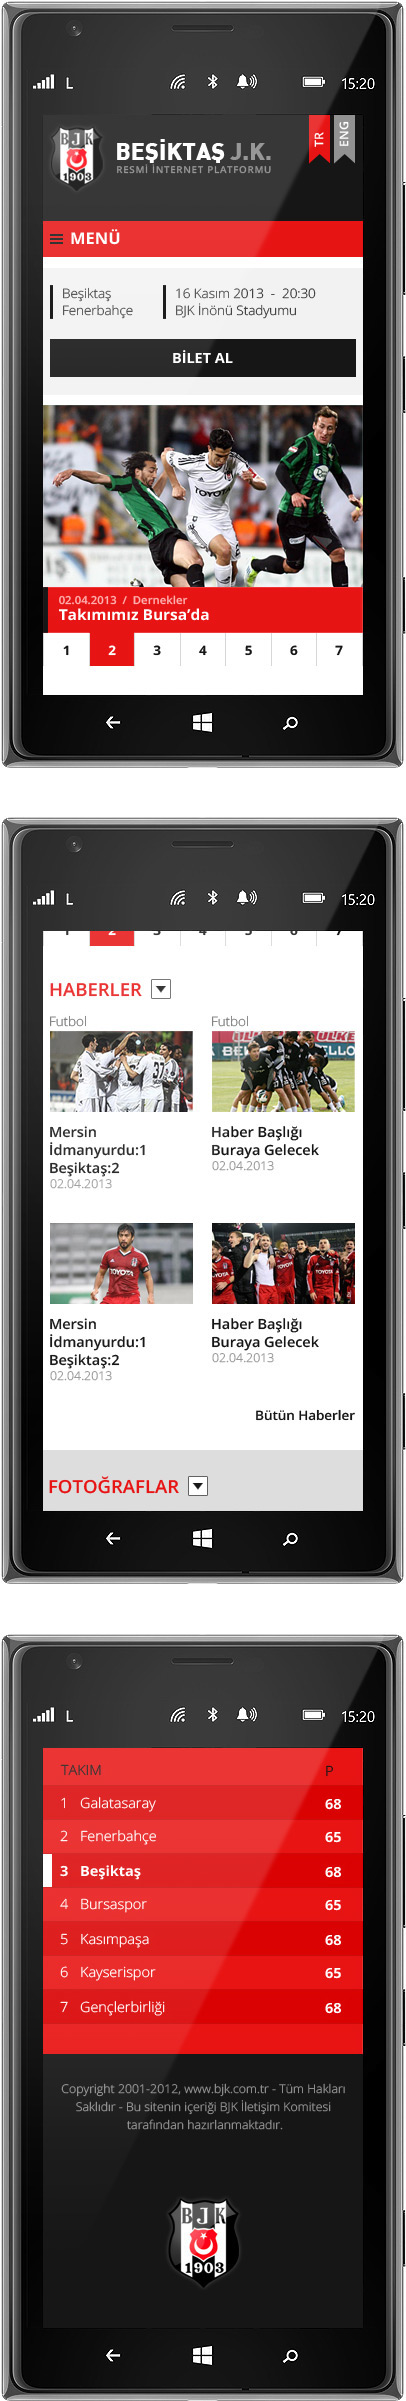 Beşiktaş web interface Responsive Design sport web site soccer